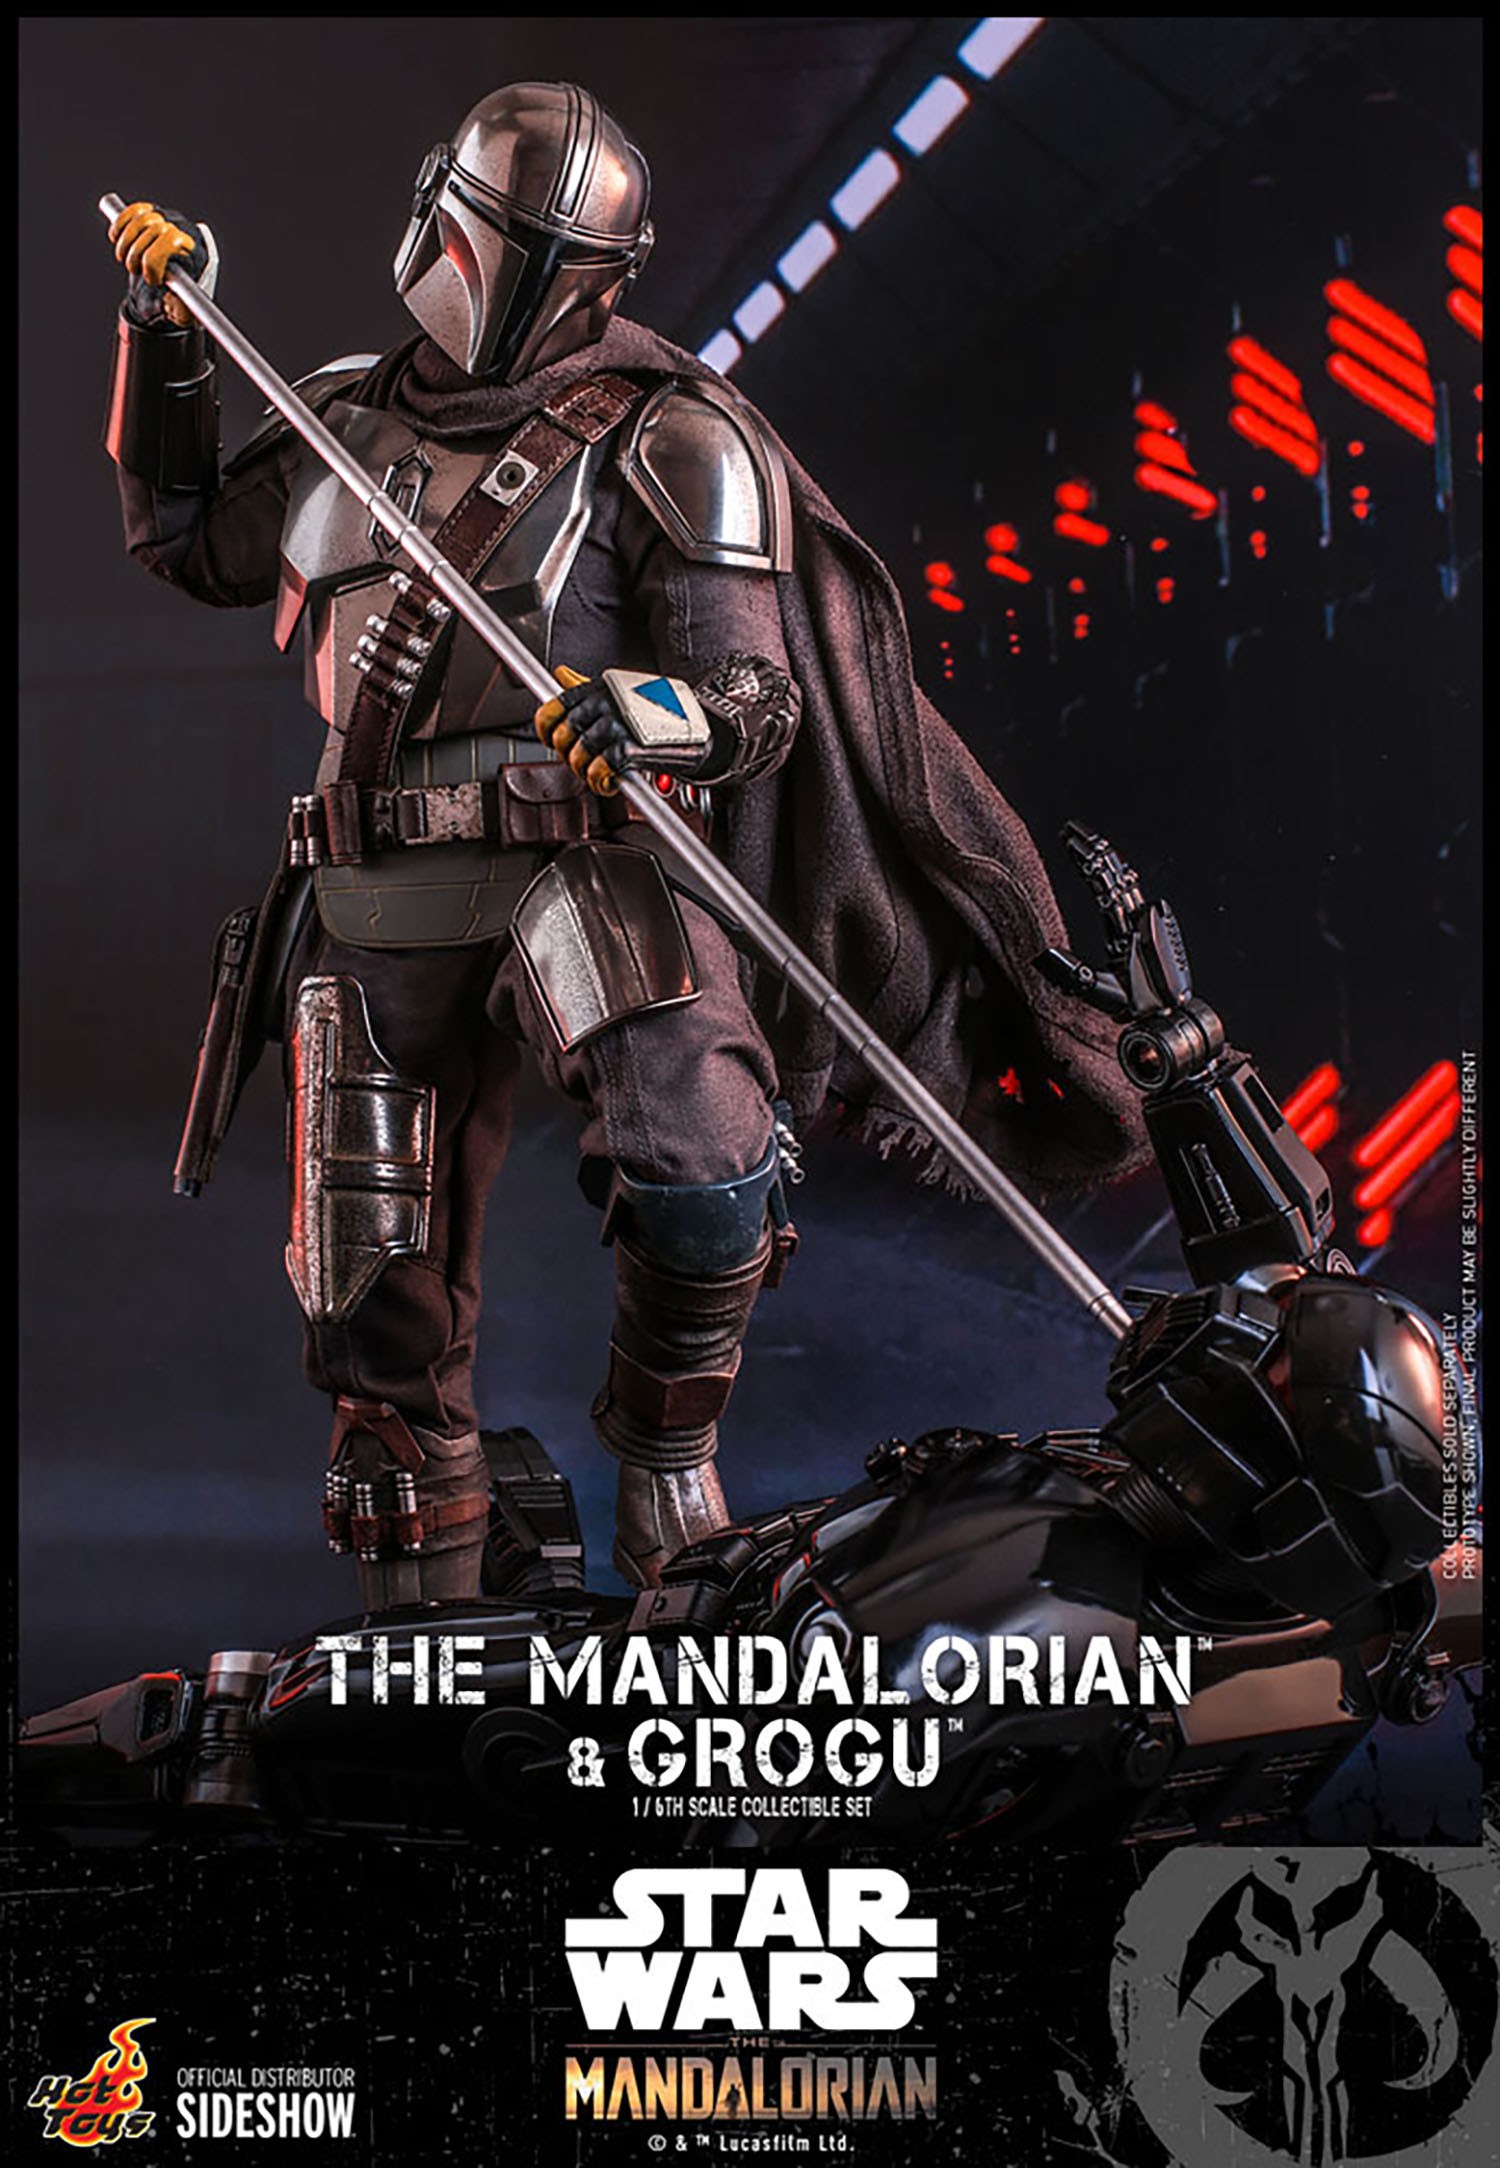 The Mandalorian™ and Grogu™